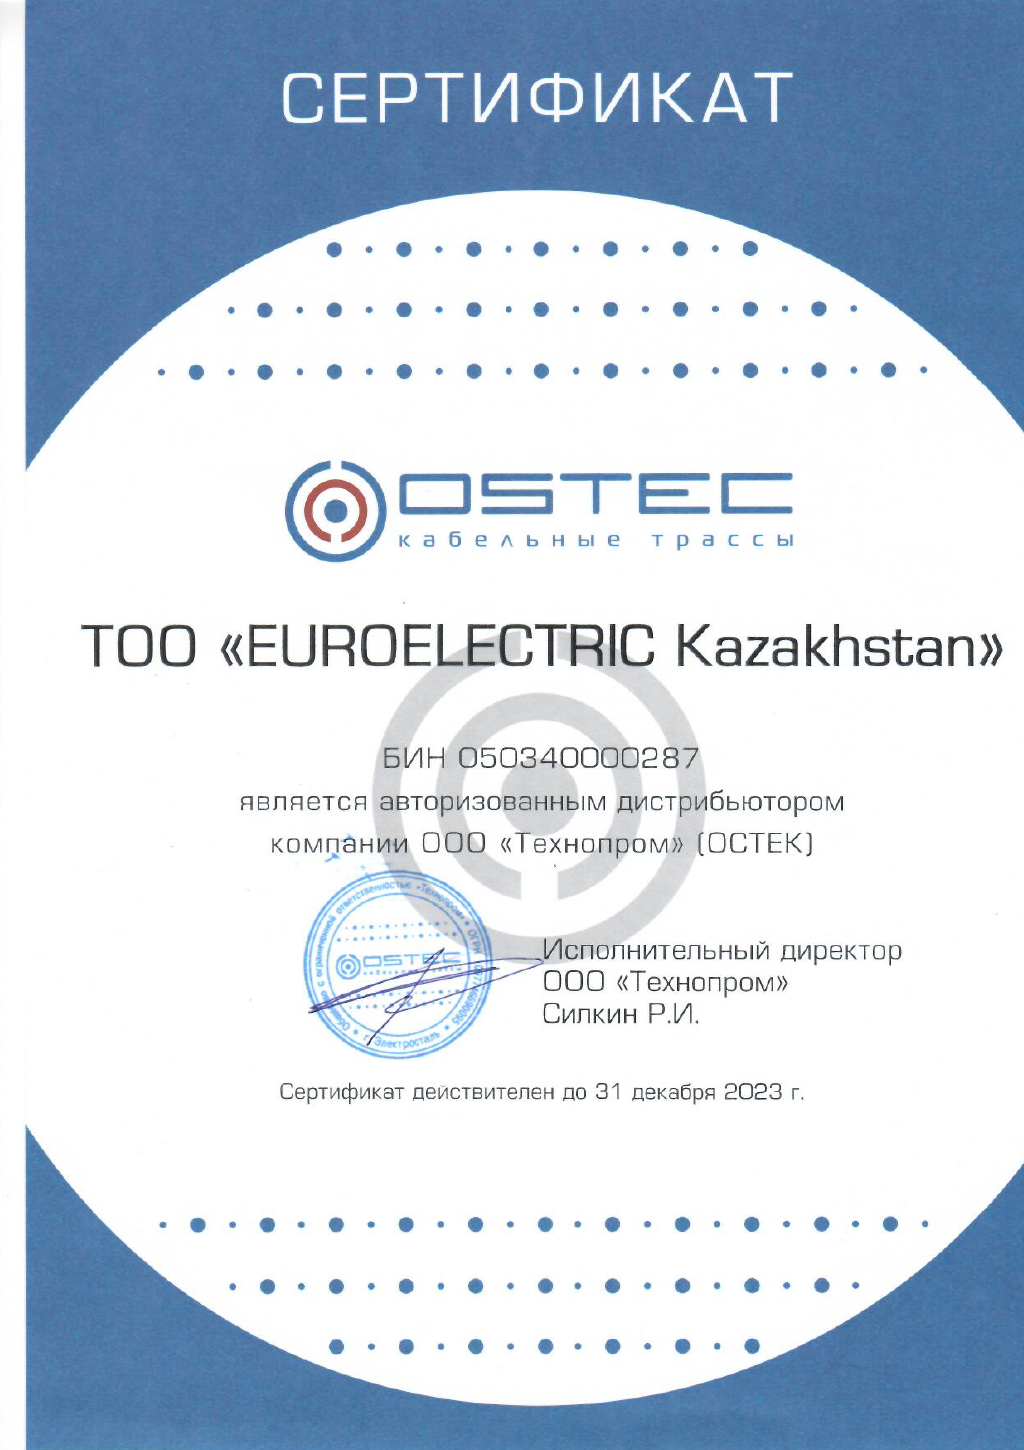 Сертификат Ostec